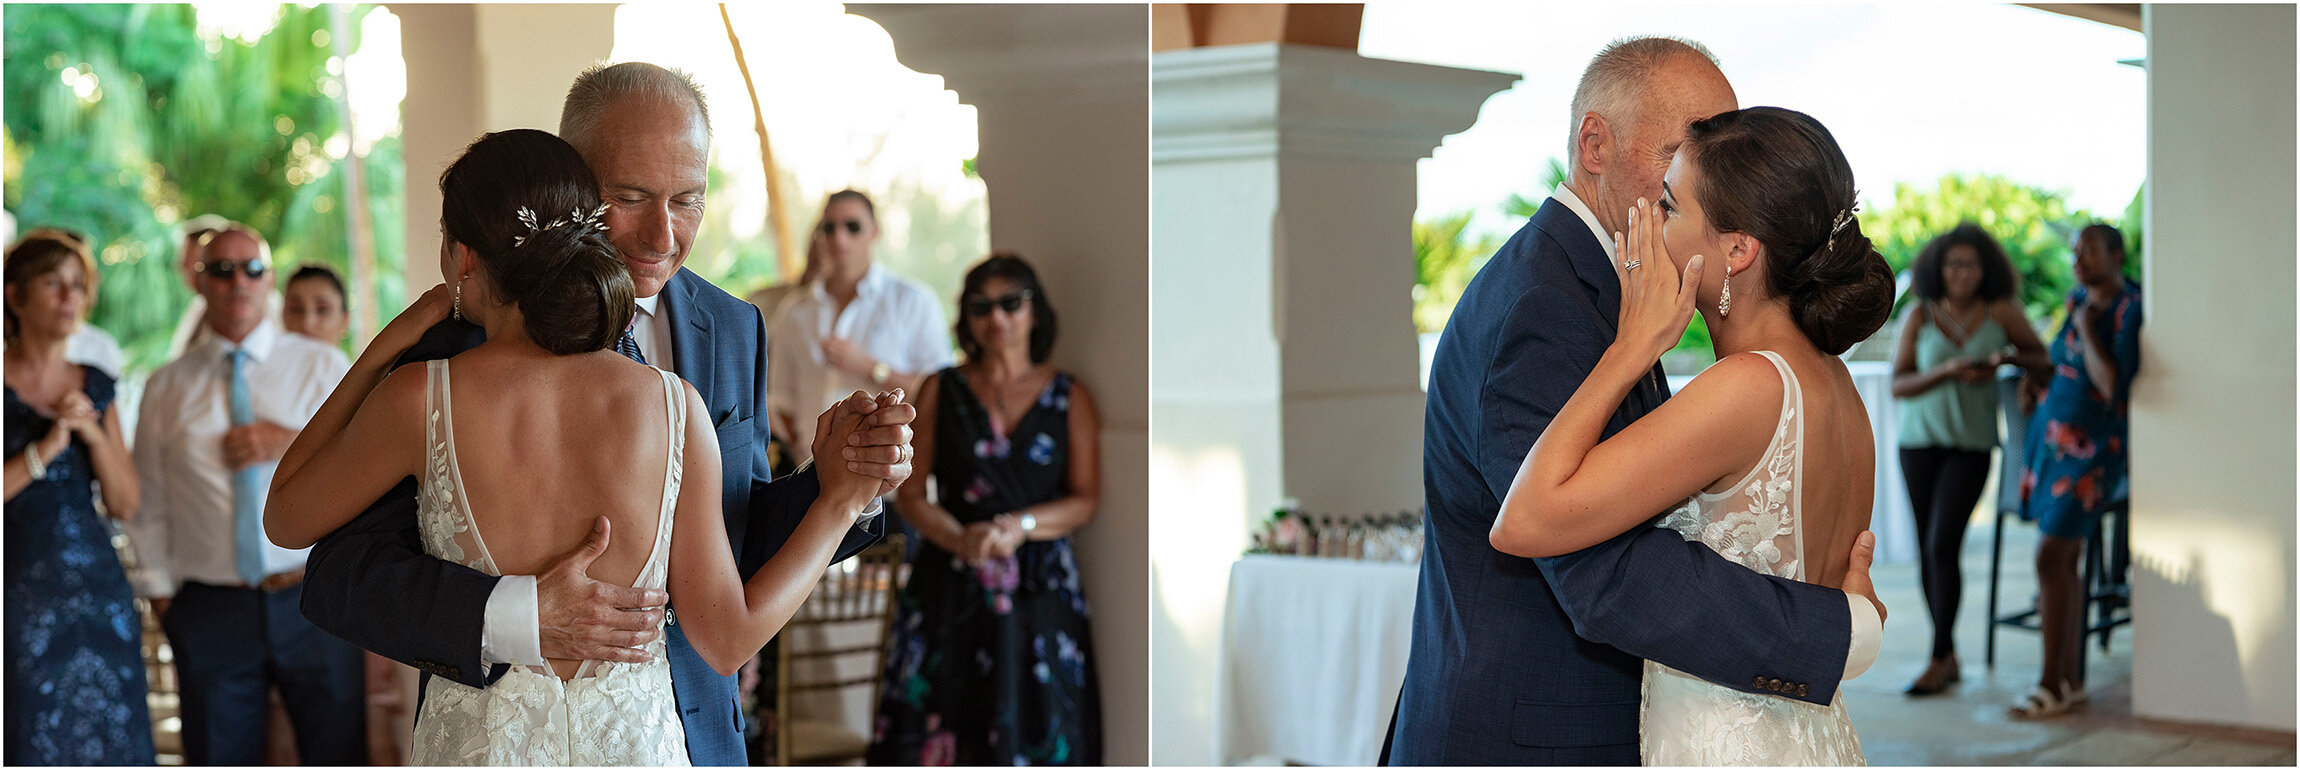 Bermuda Wedding Photographer_Grotto Bay Resort_C and S_©FianderFoto_059.jpg